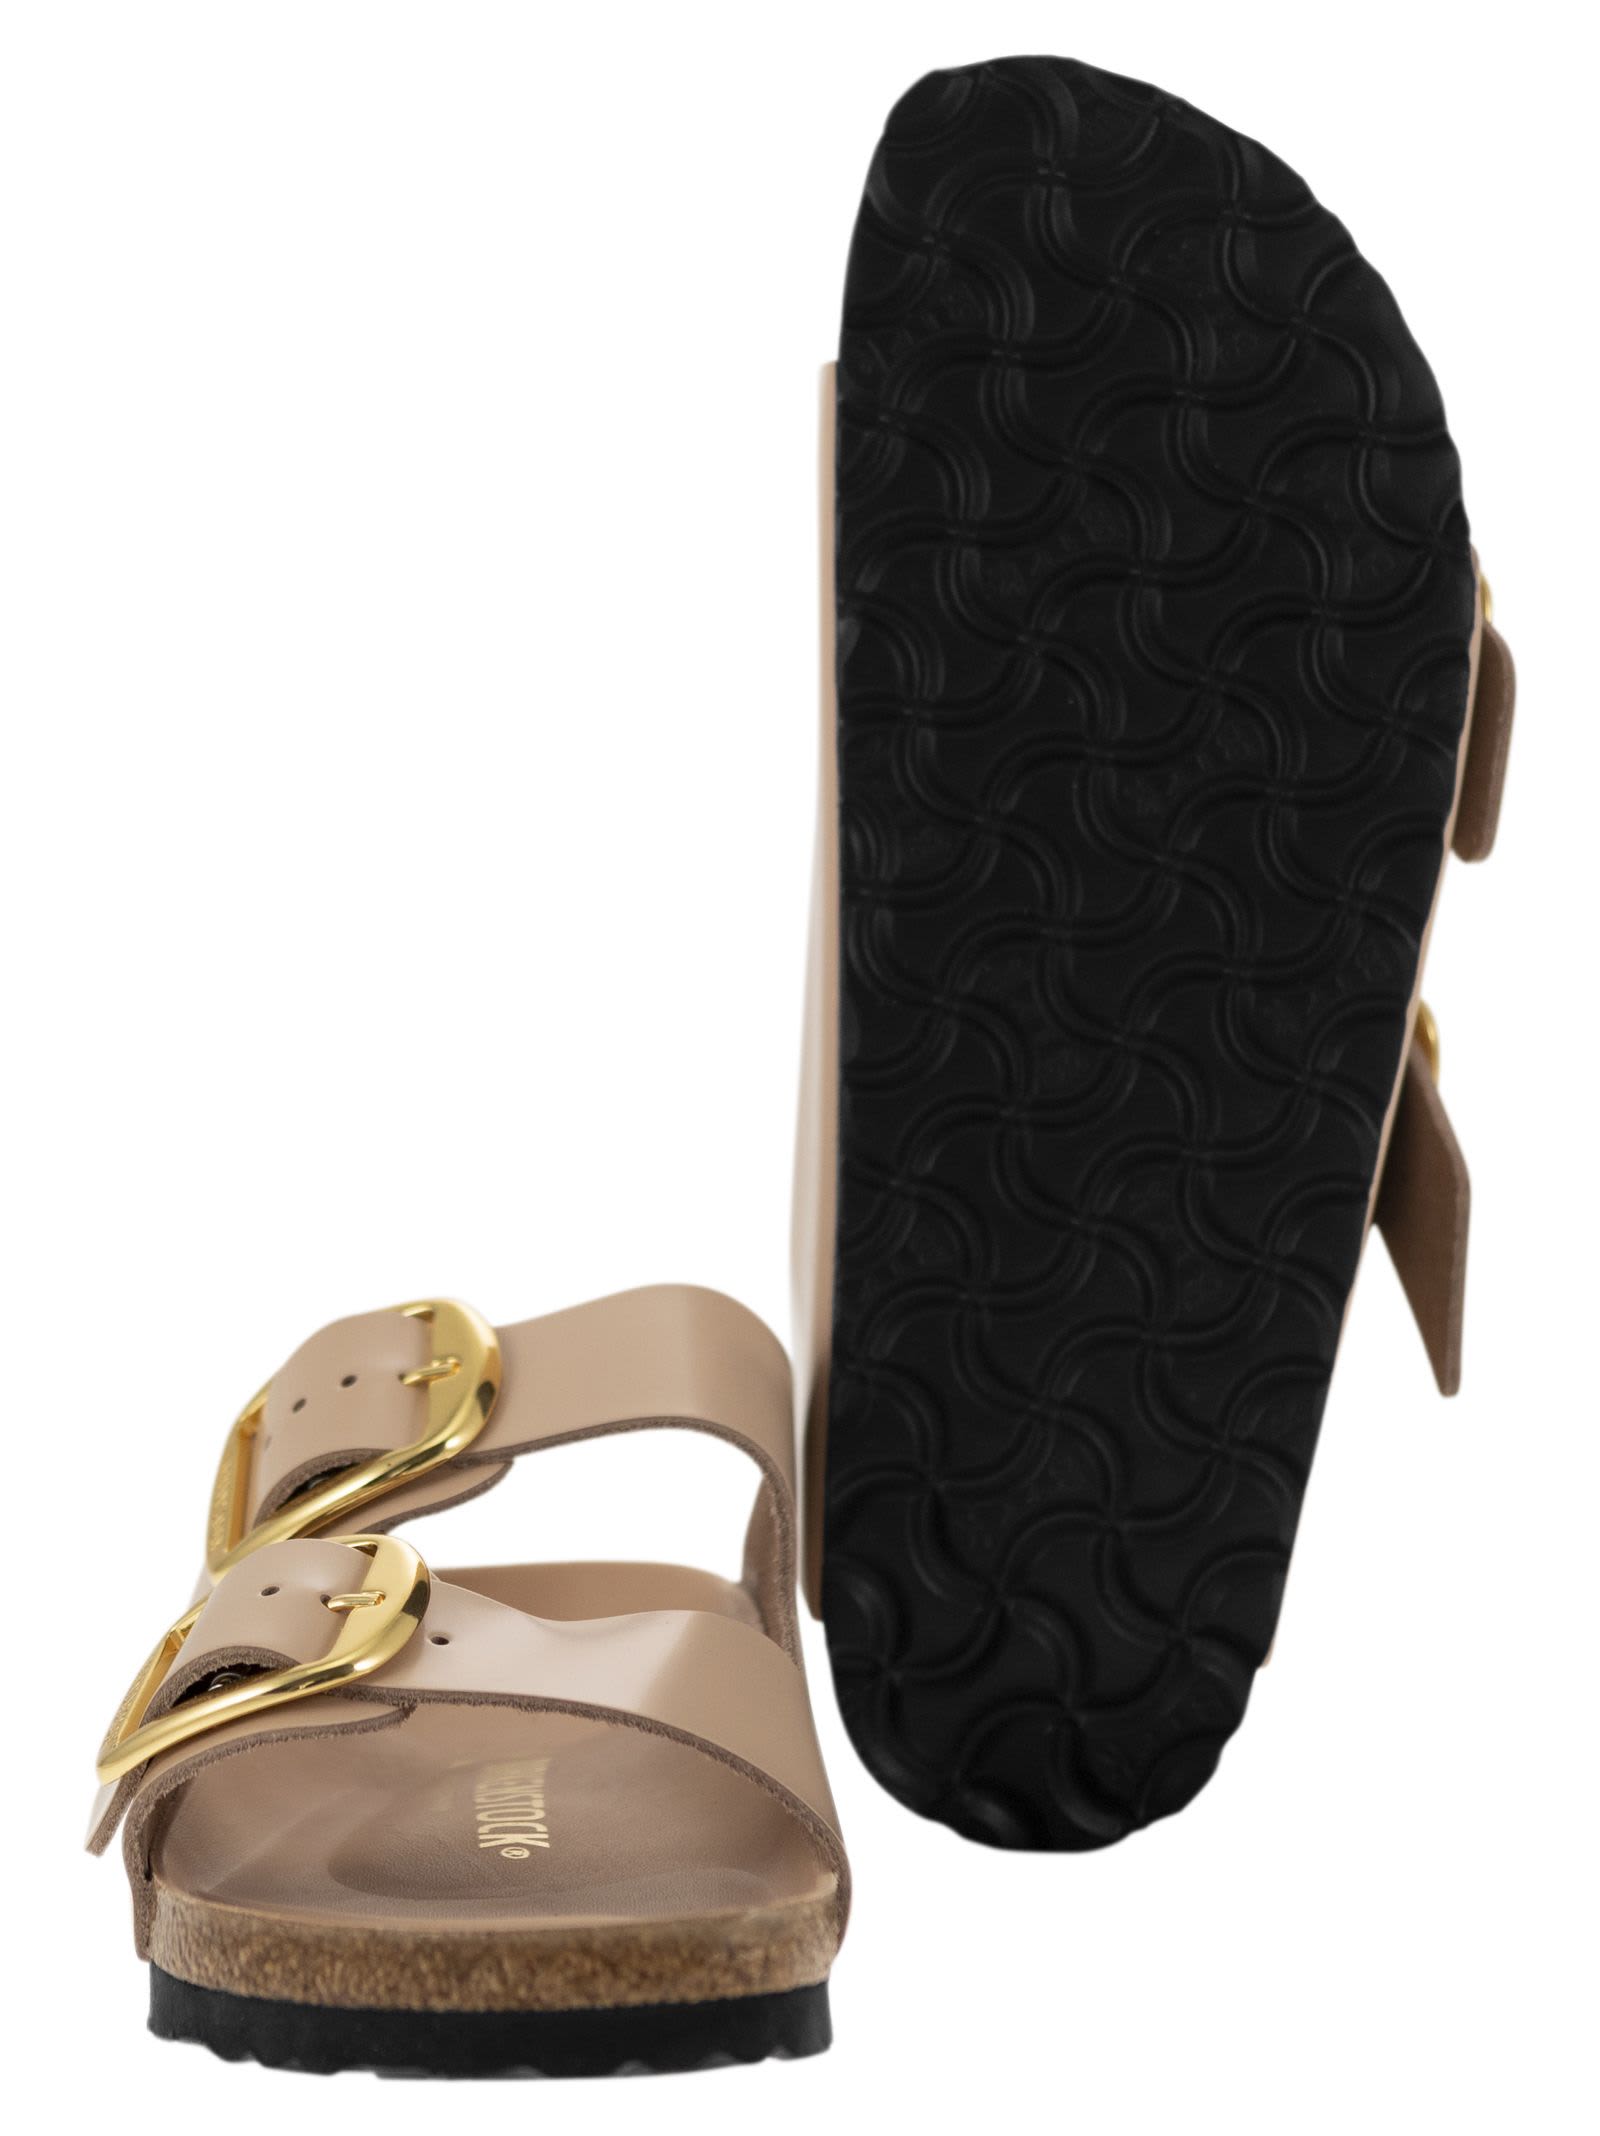 Shop Birkenstock Arizona - Slipper Sandal In New Beige